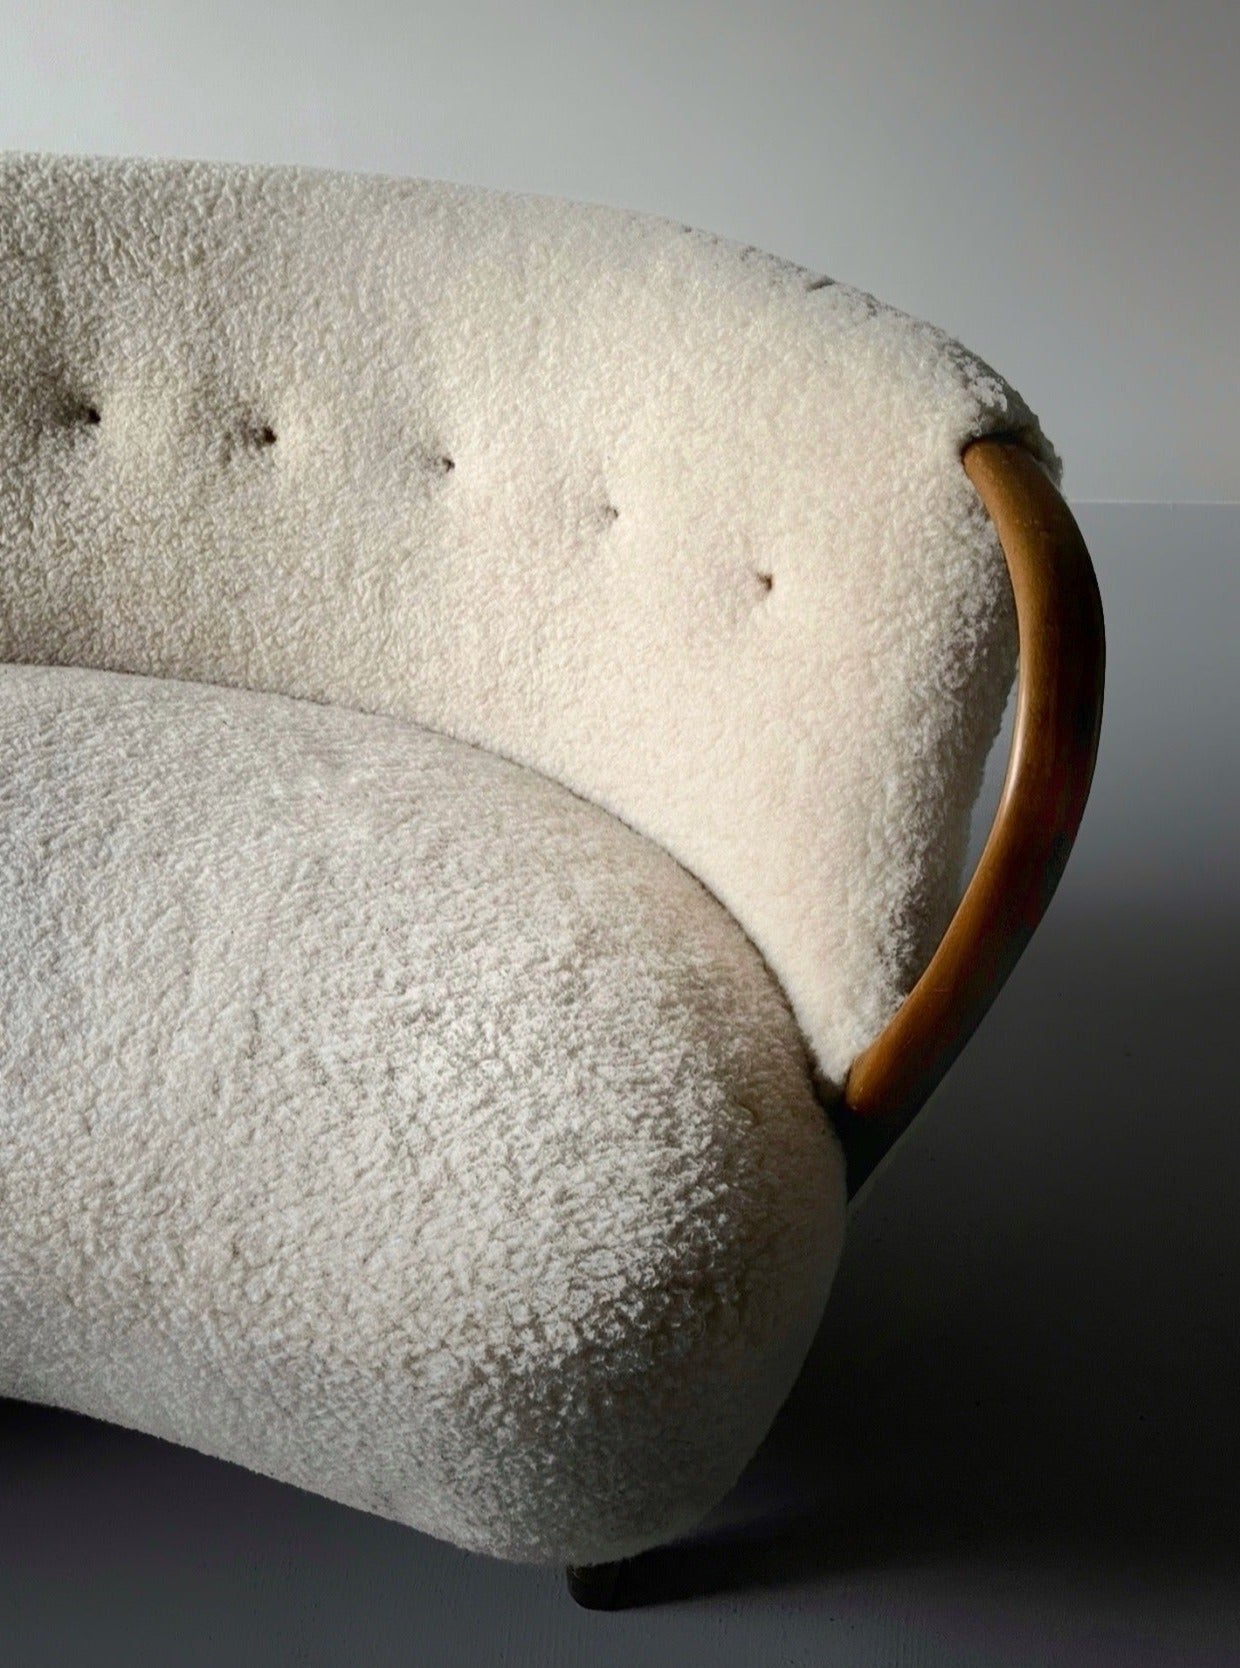 Model No. 96 banana shaped sofa by N.A. Jørgensen